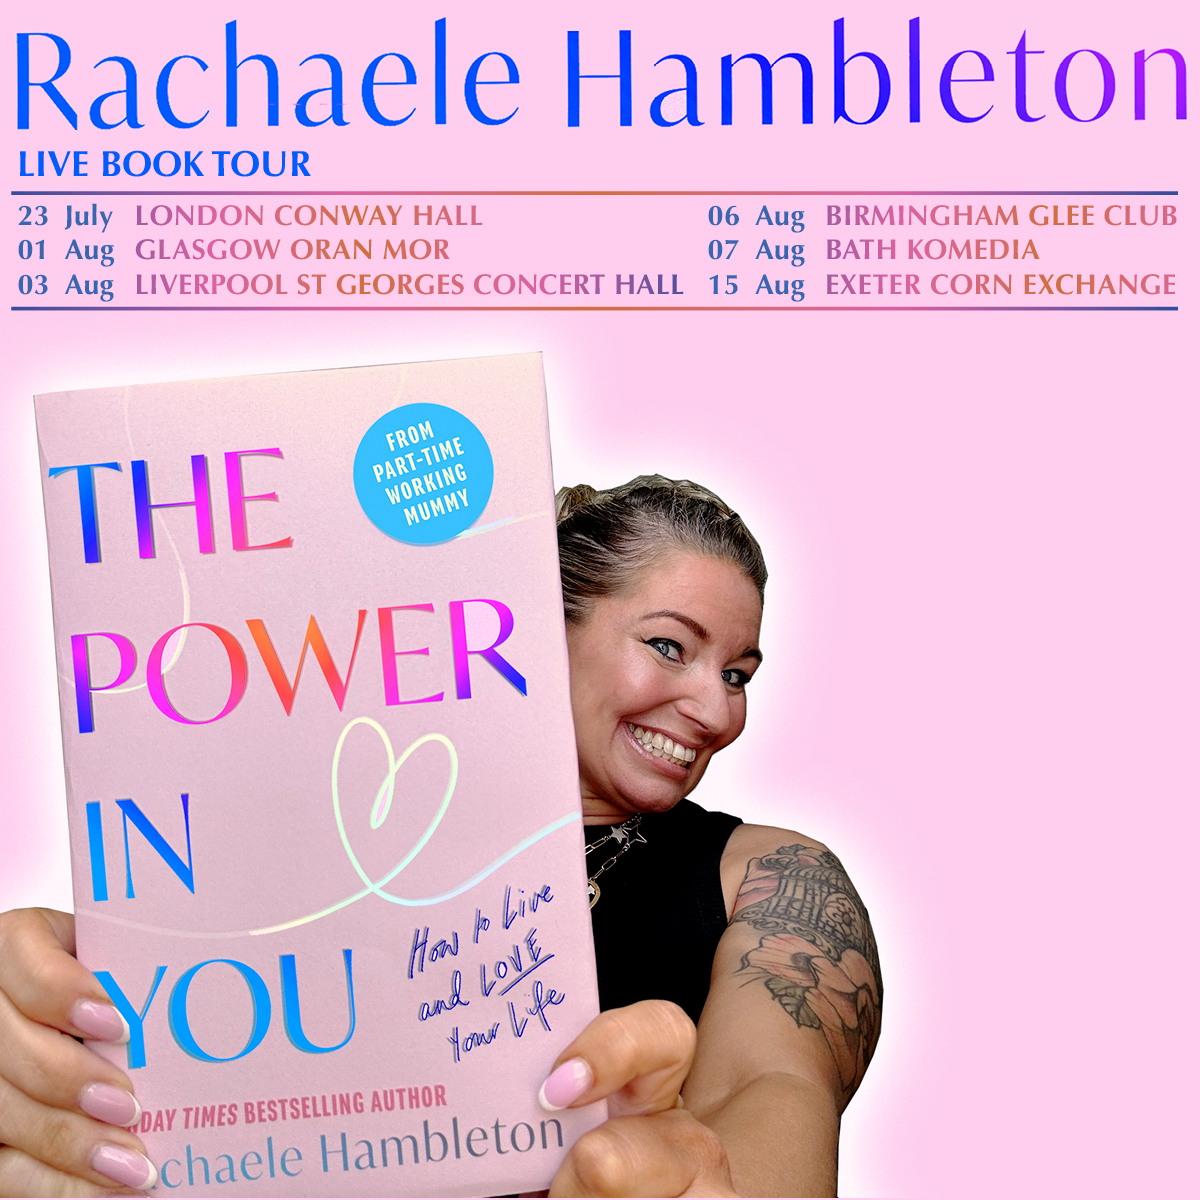 Rachaele Hambleton - live talk at The Glee Club Birmingham